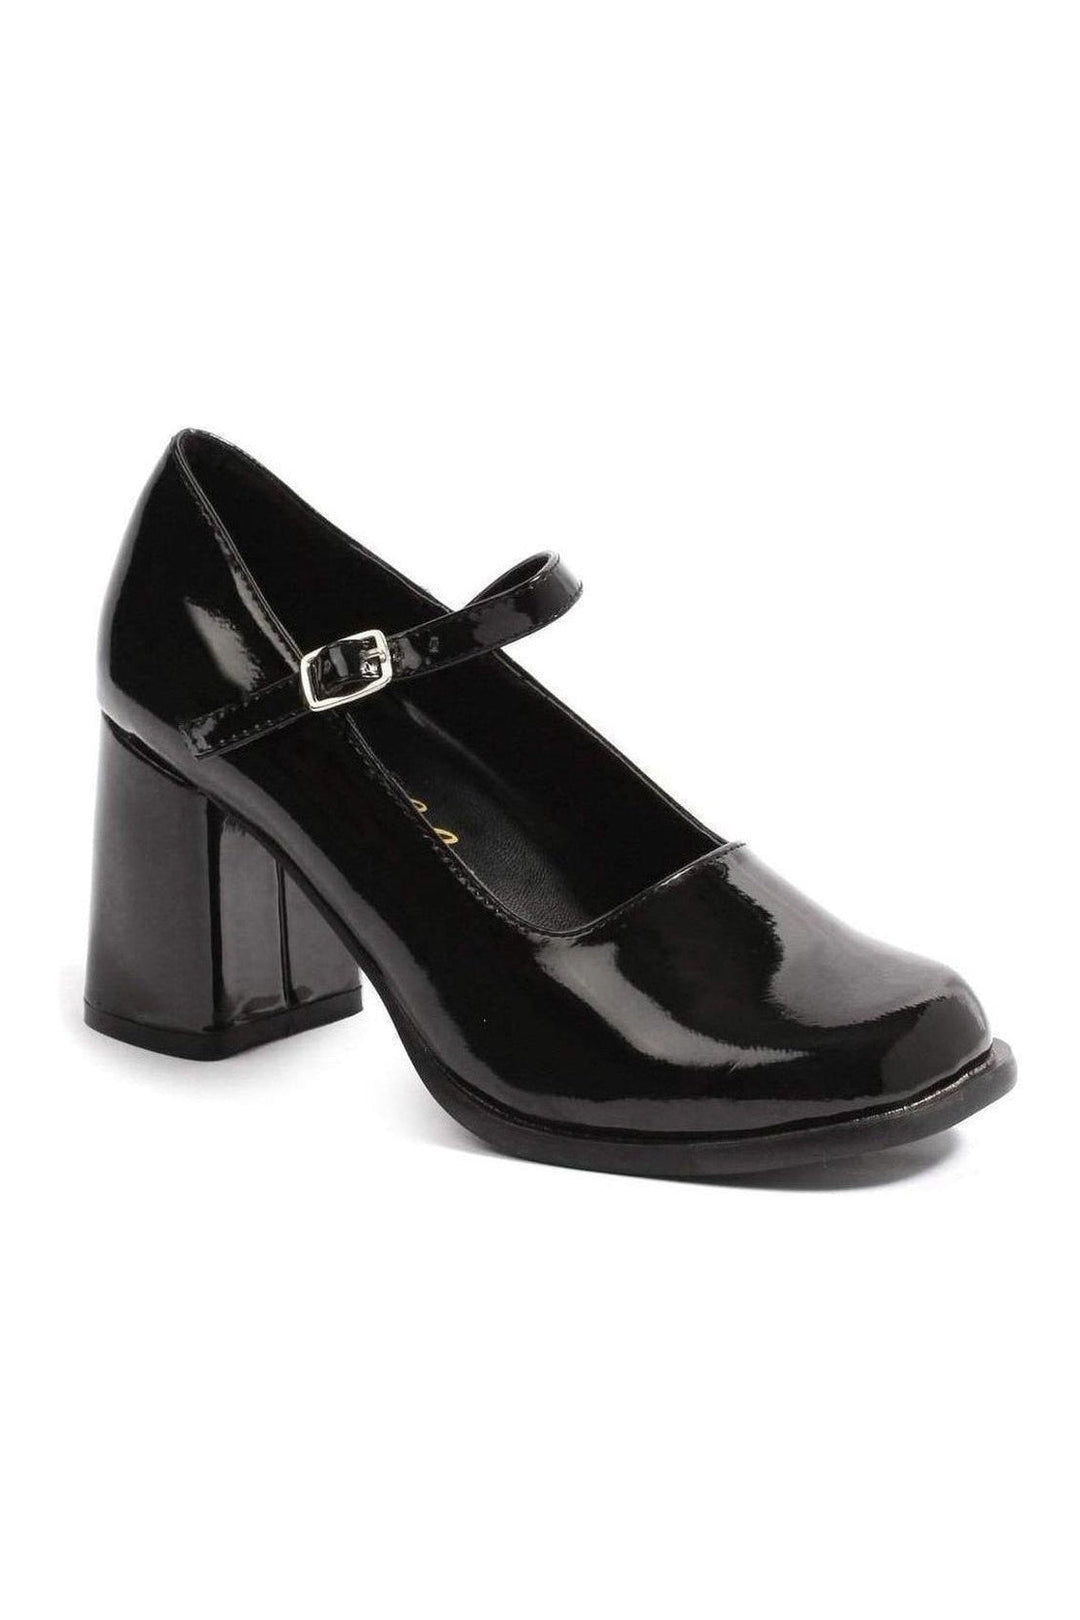 300-EDEN Mary Jane | Black Patent-Ellie Shoes-Black-Mary Janes-SEXYSHOES.COM